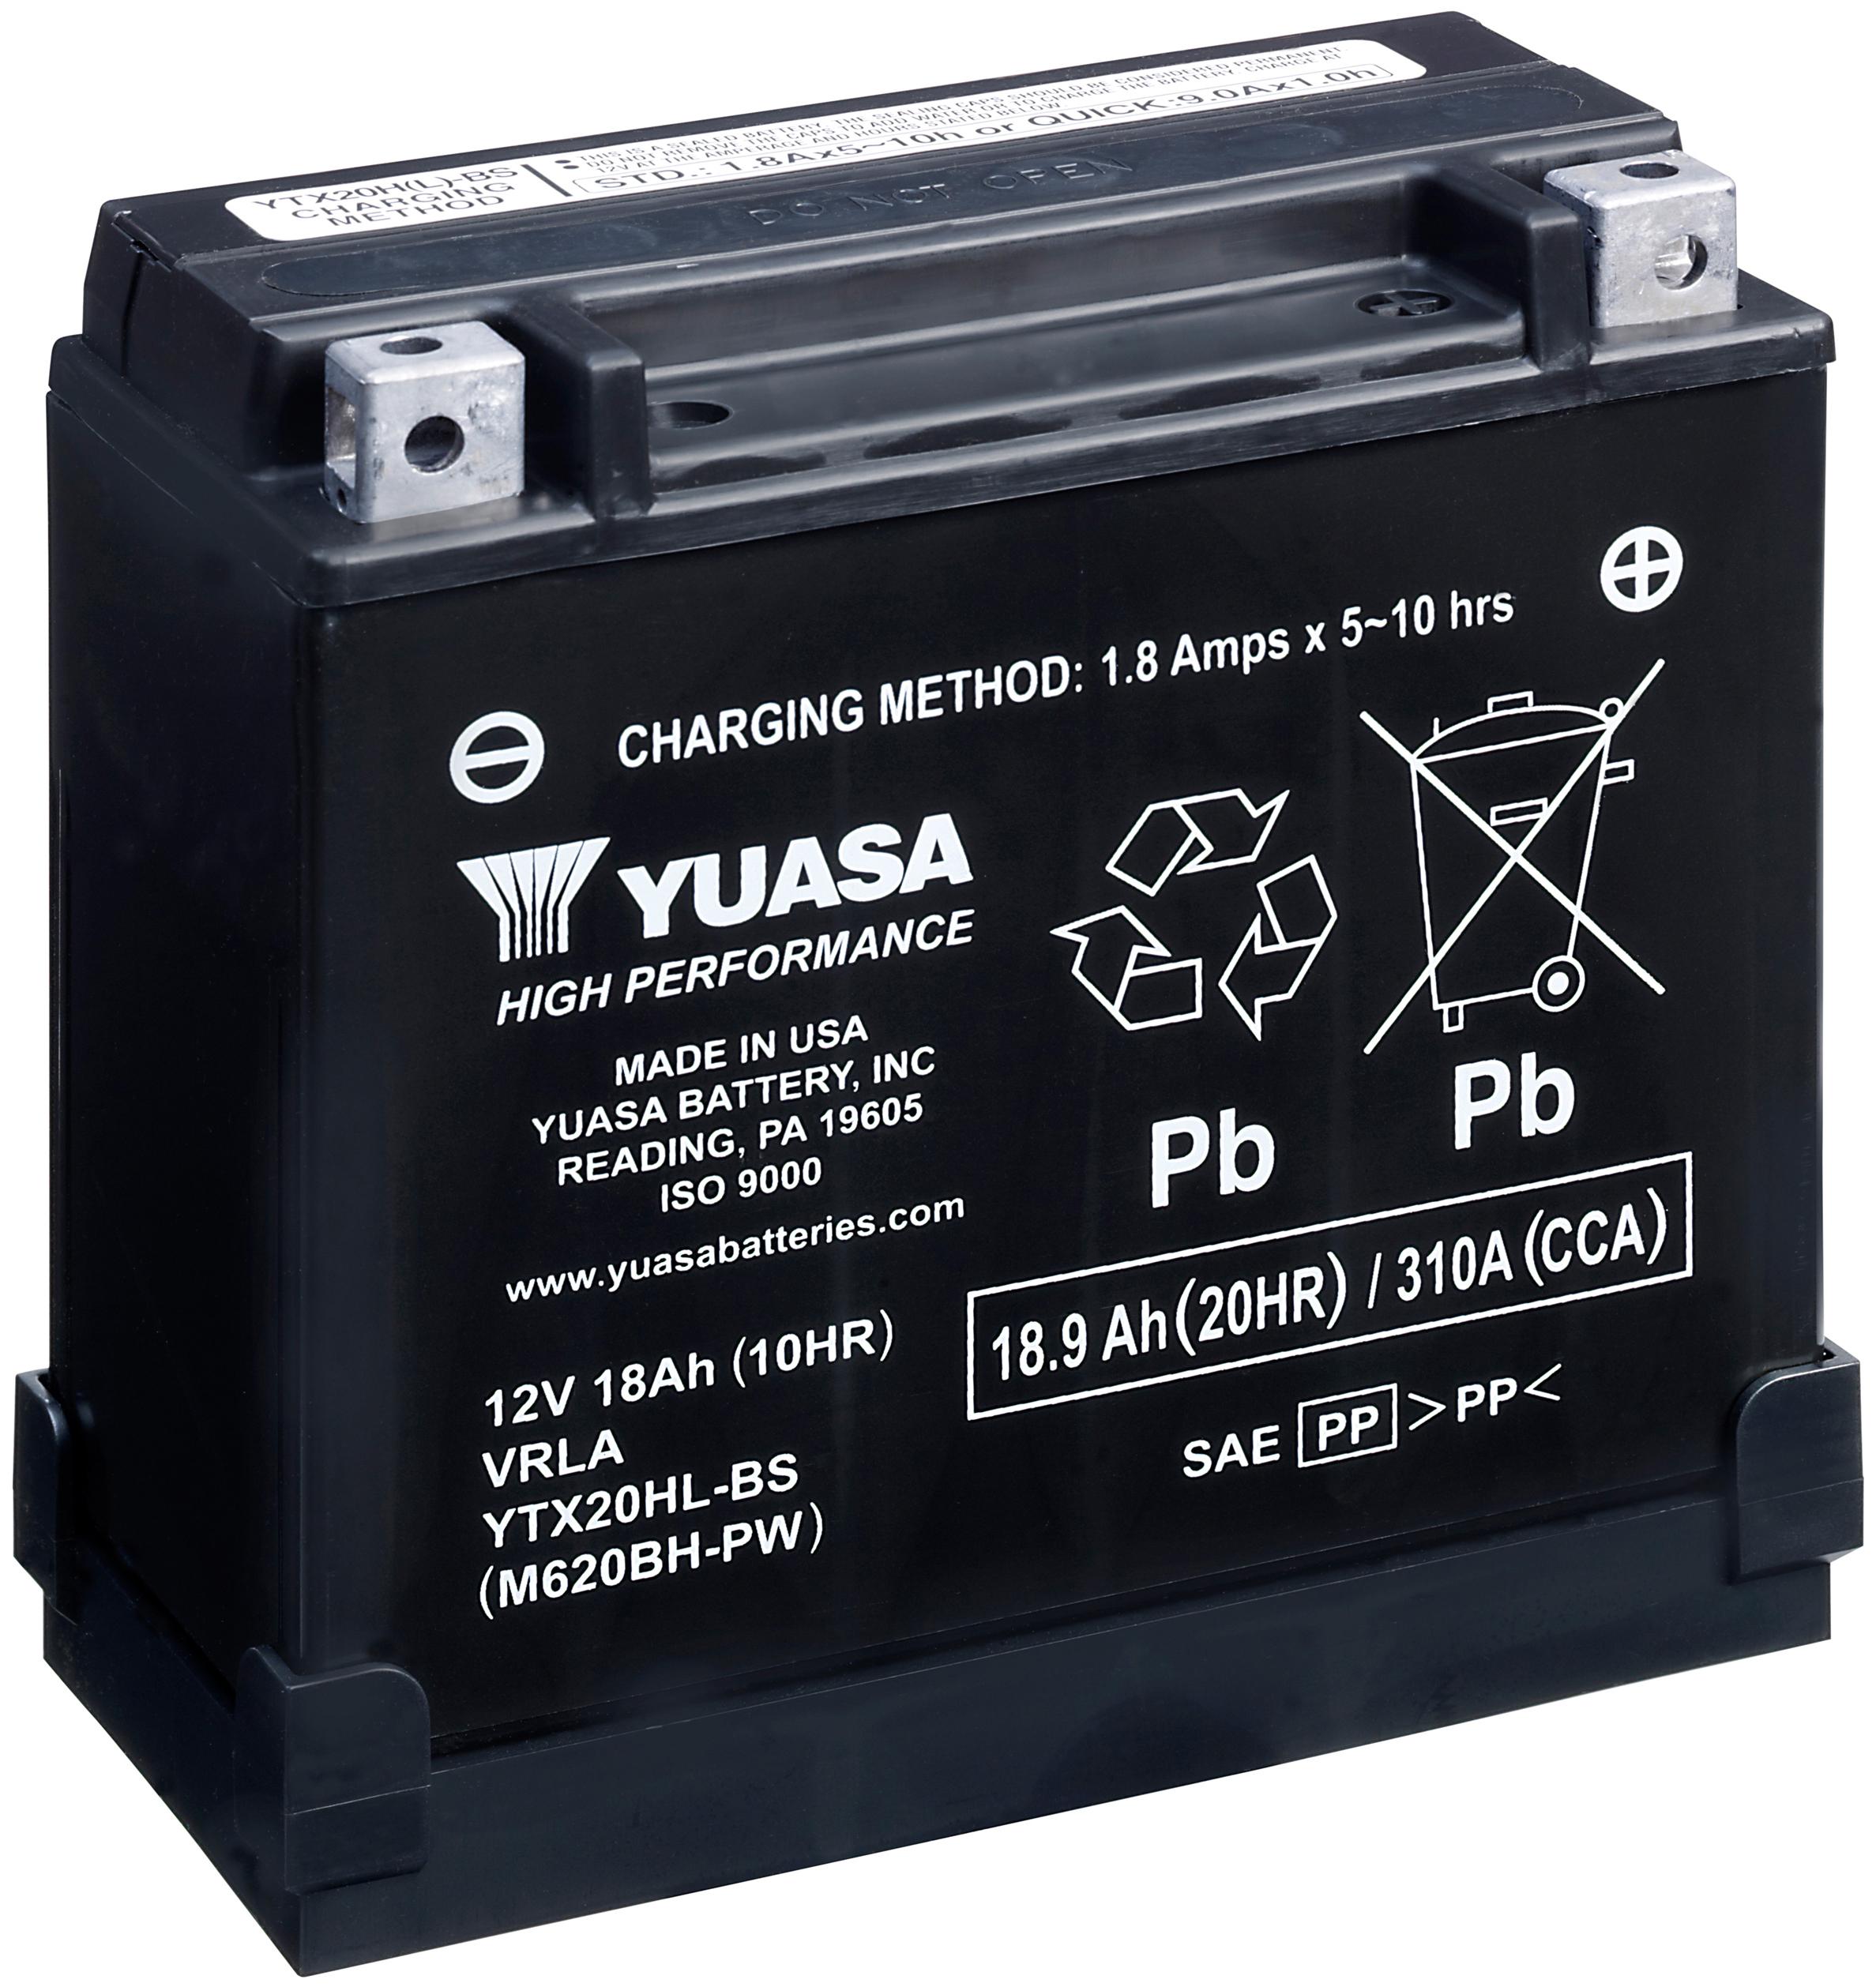 Yuasa Ytx20Hl-Bs-Pw(Cp) 12V High Performance Maintenance Free Vrla Battery